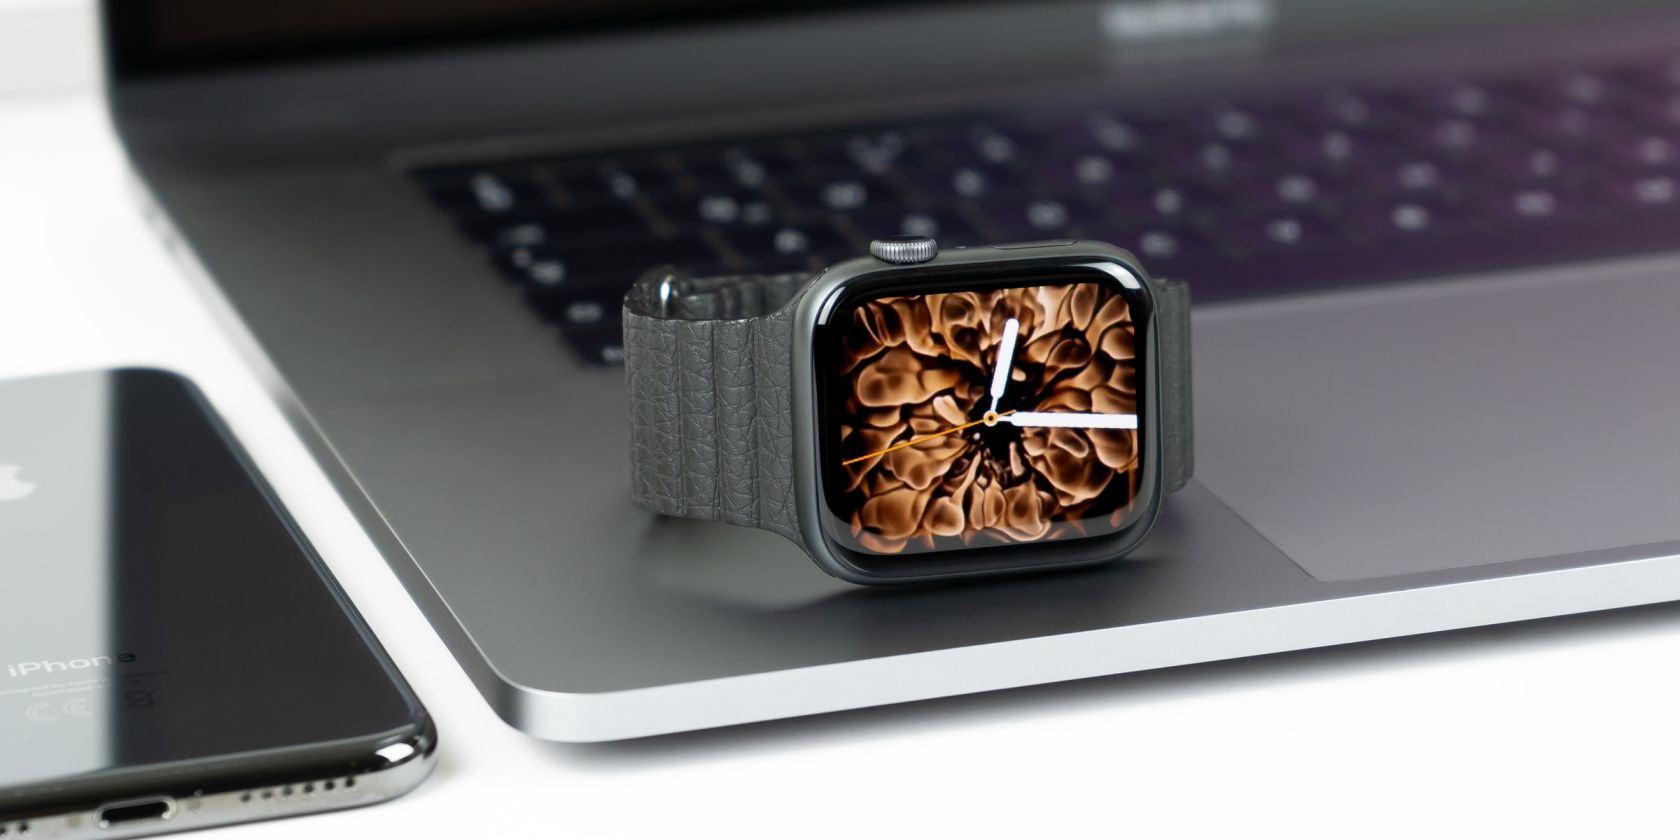 Apple Watch on top of a MacBook